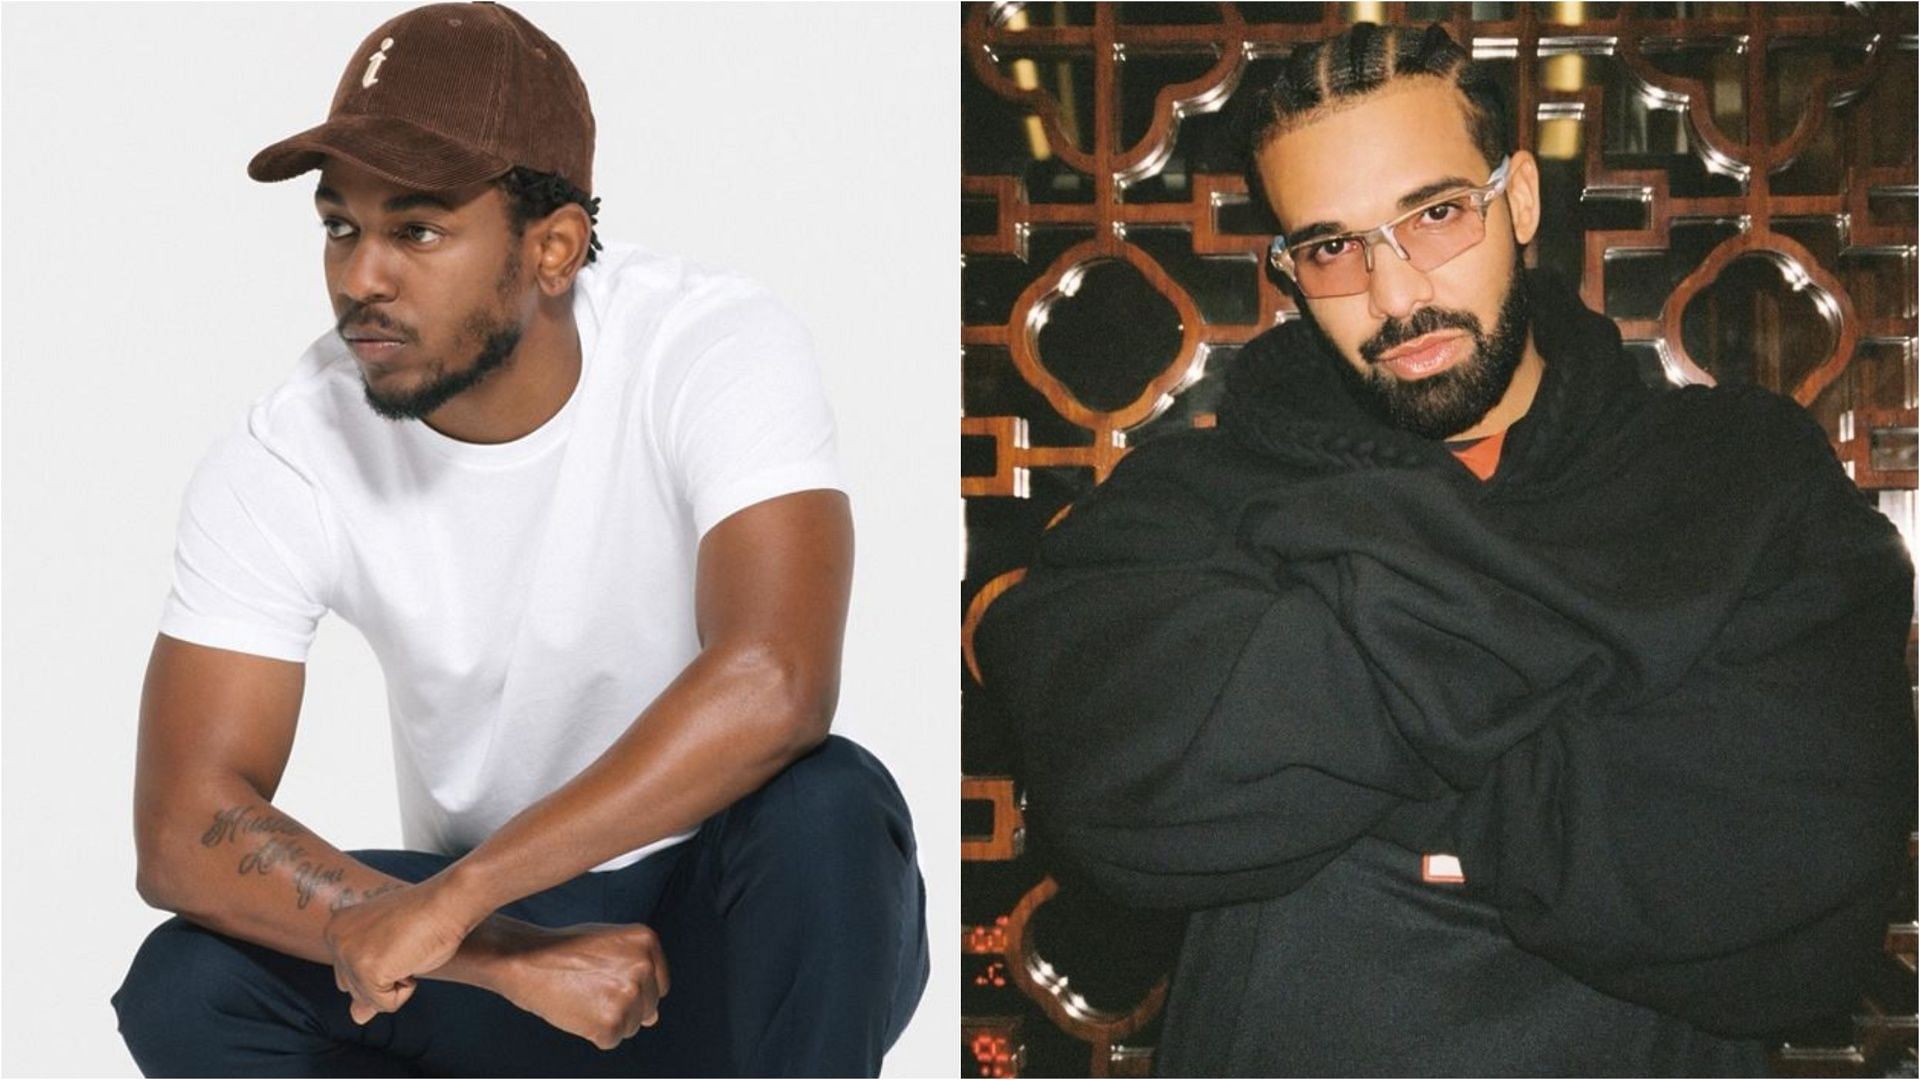 Kendrick Lamar refers to Drake as &quot;crodie&quot; in his diss track &quot;Euphoria&quot;. (Image via Facebook/Kendrick Lamar via Christian San Jose, Instagram/@champagnepapi)